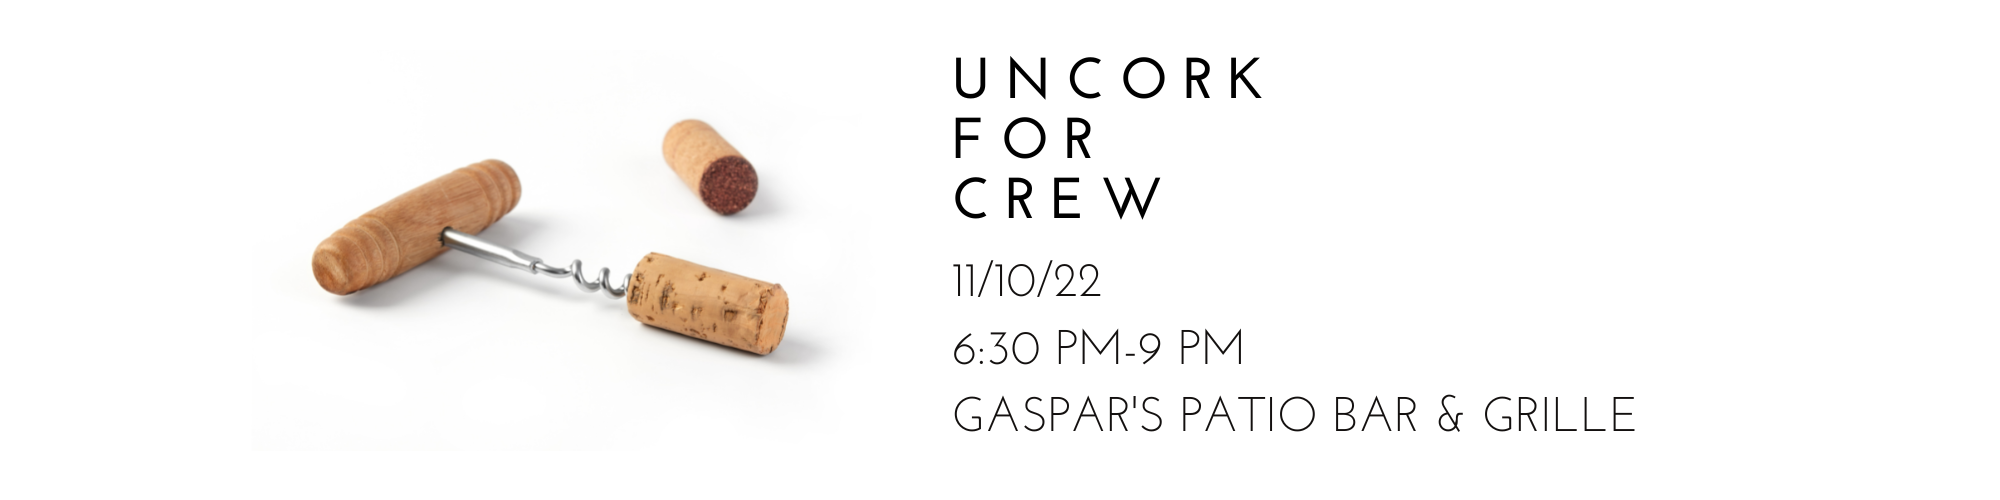 Uncork for crew